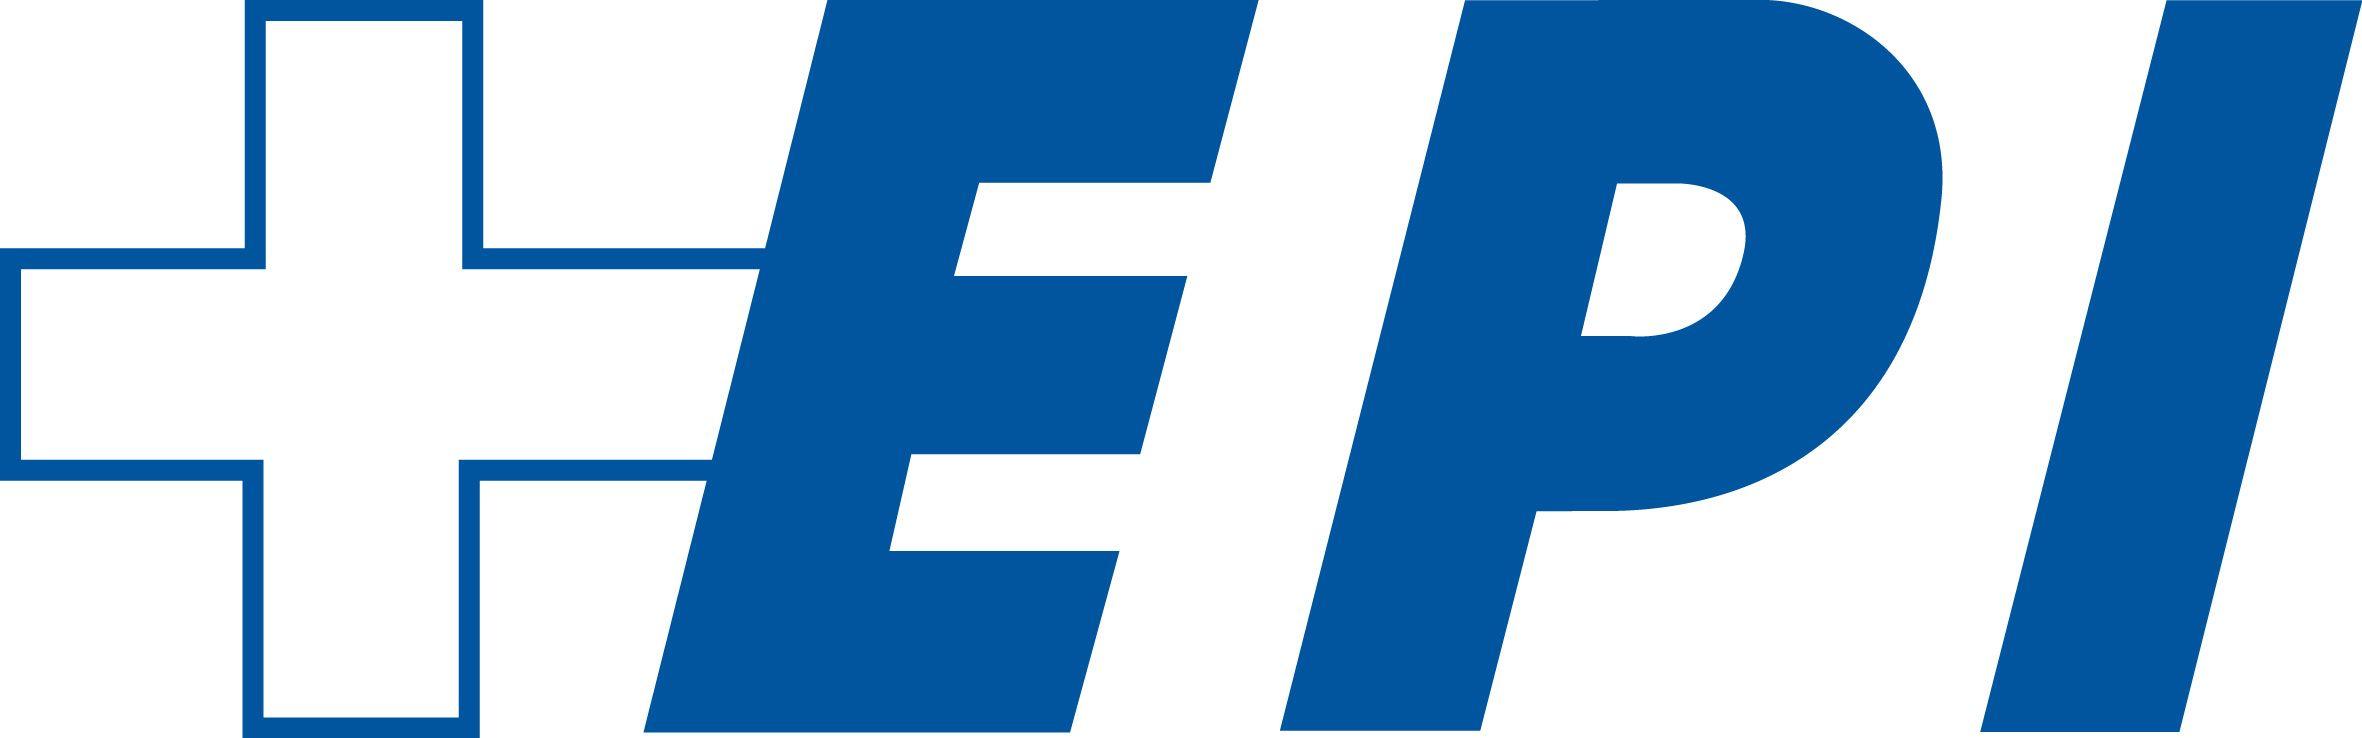 Epi Logo - File:EPI Logo 100 blau RGB.jpg - Wikimedia Commons